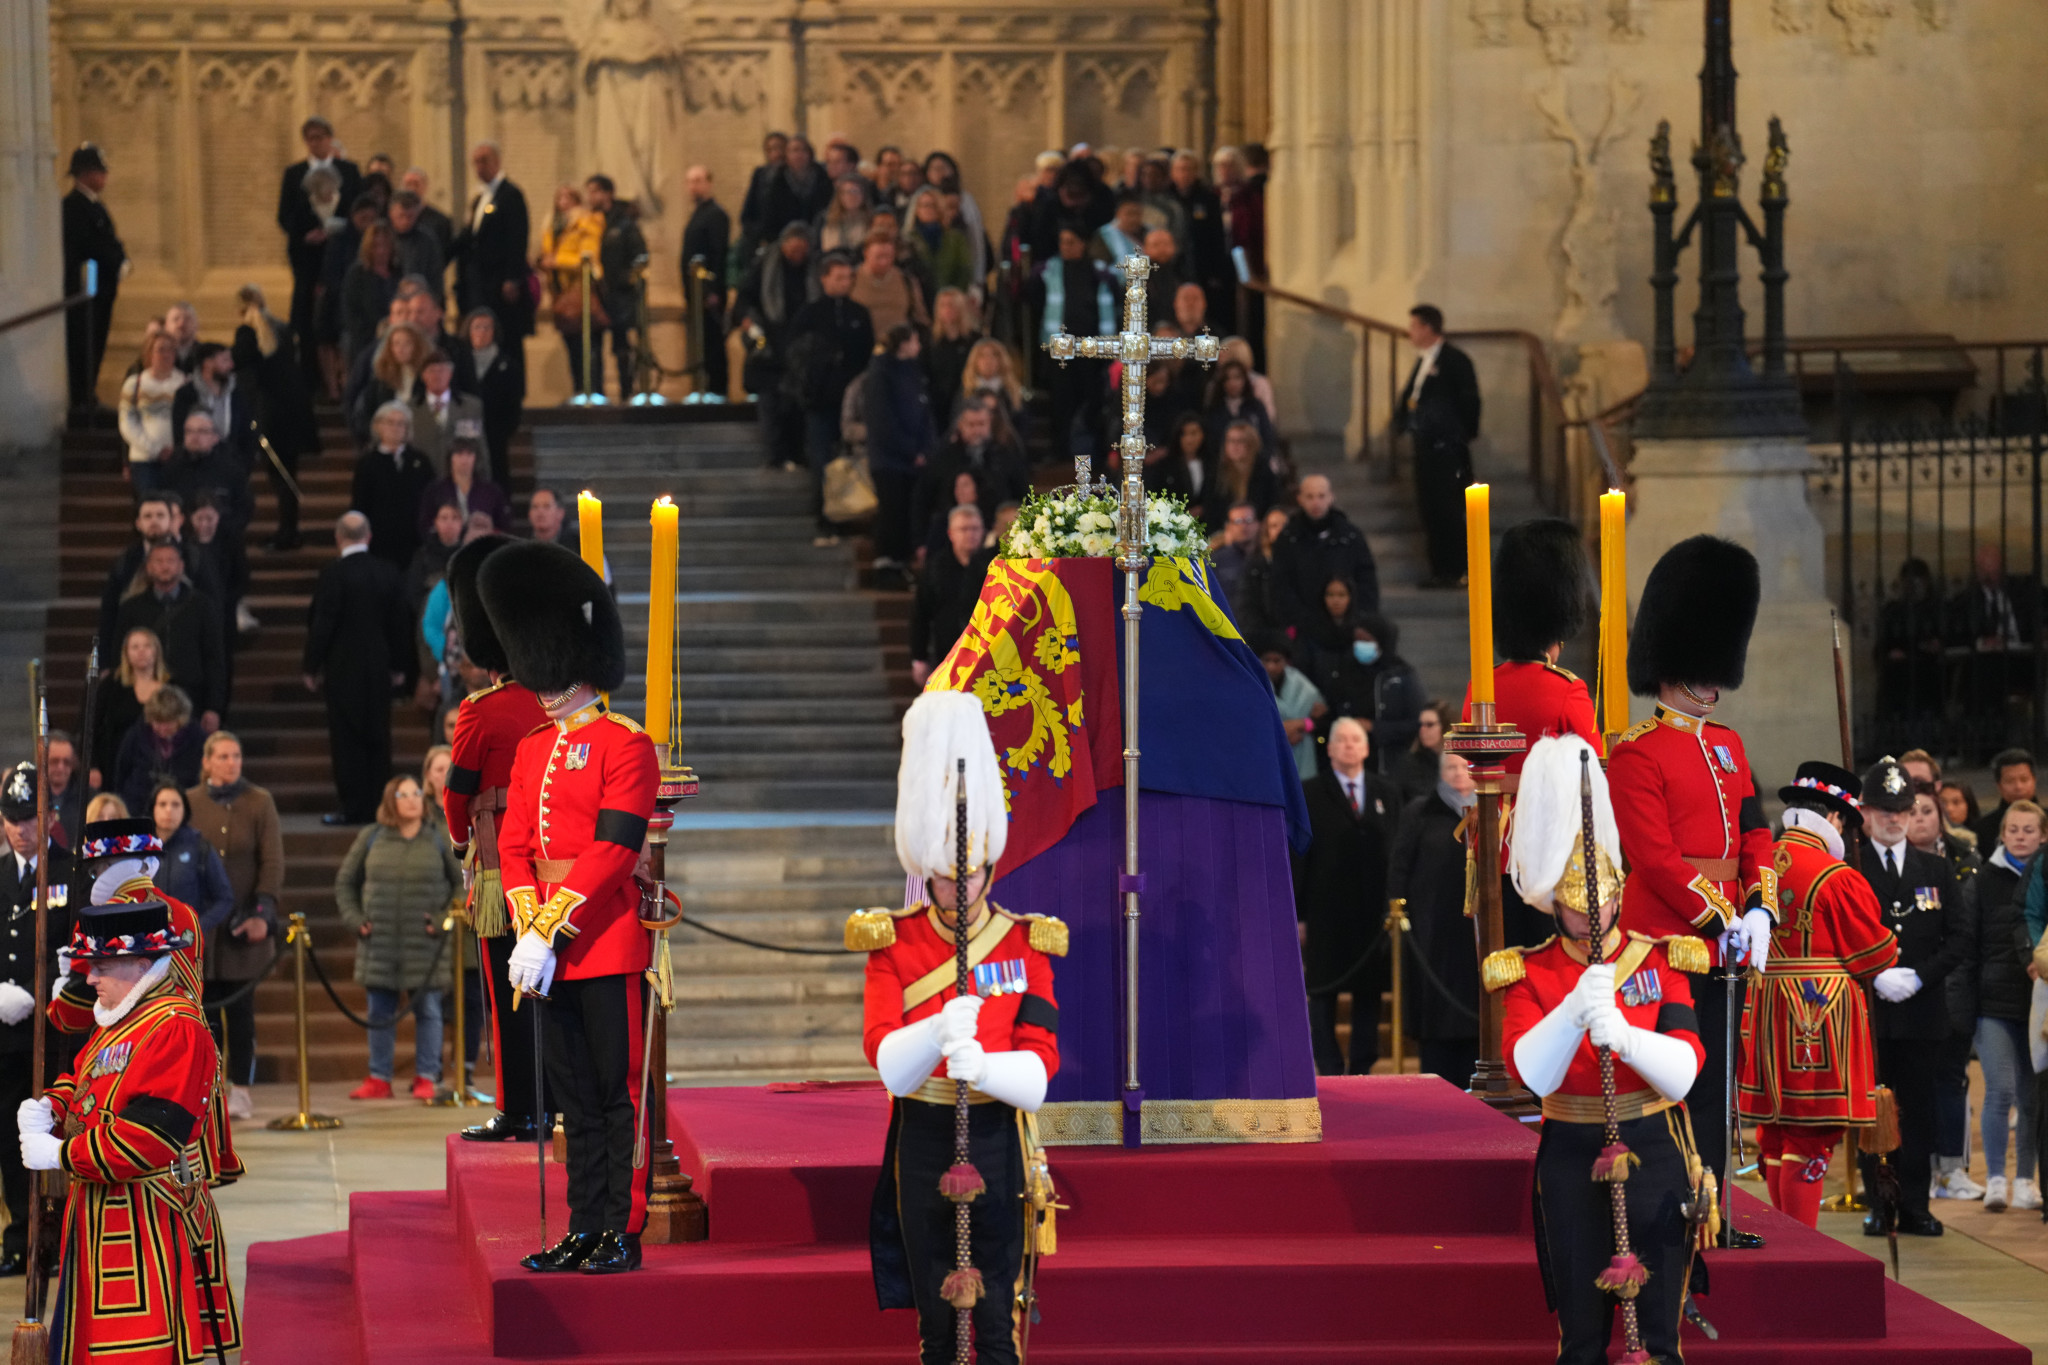 Queen Elizabeth II's funeral is set for Monday ©Getty Images